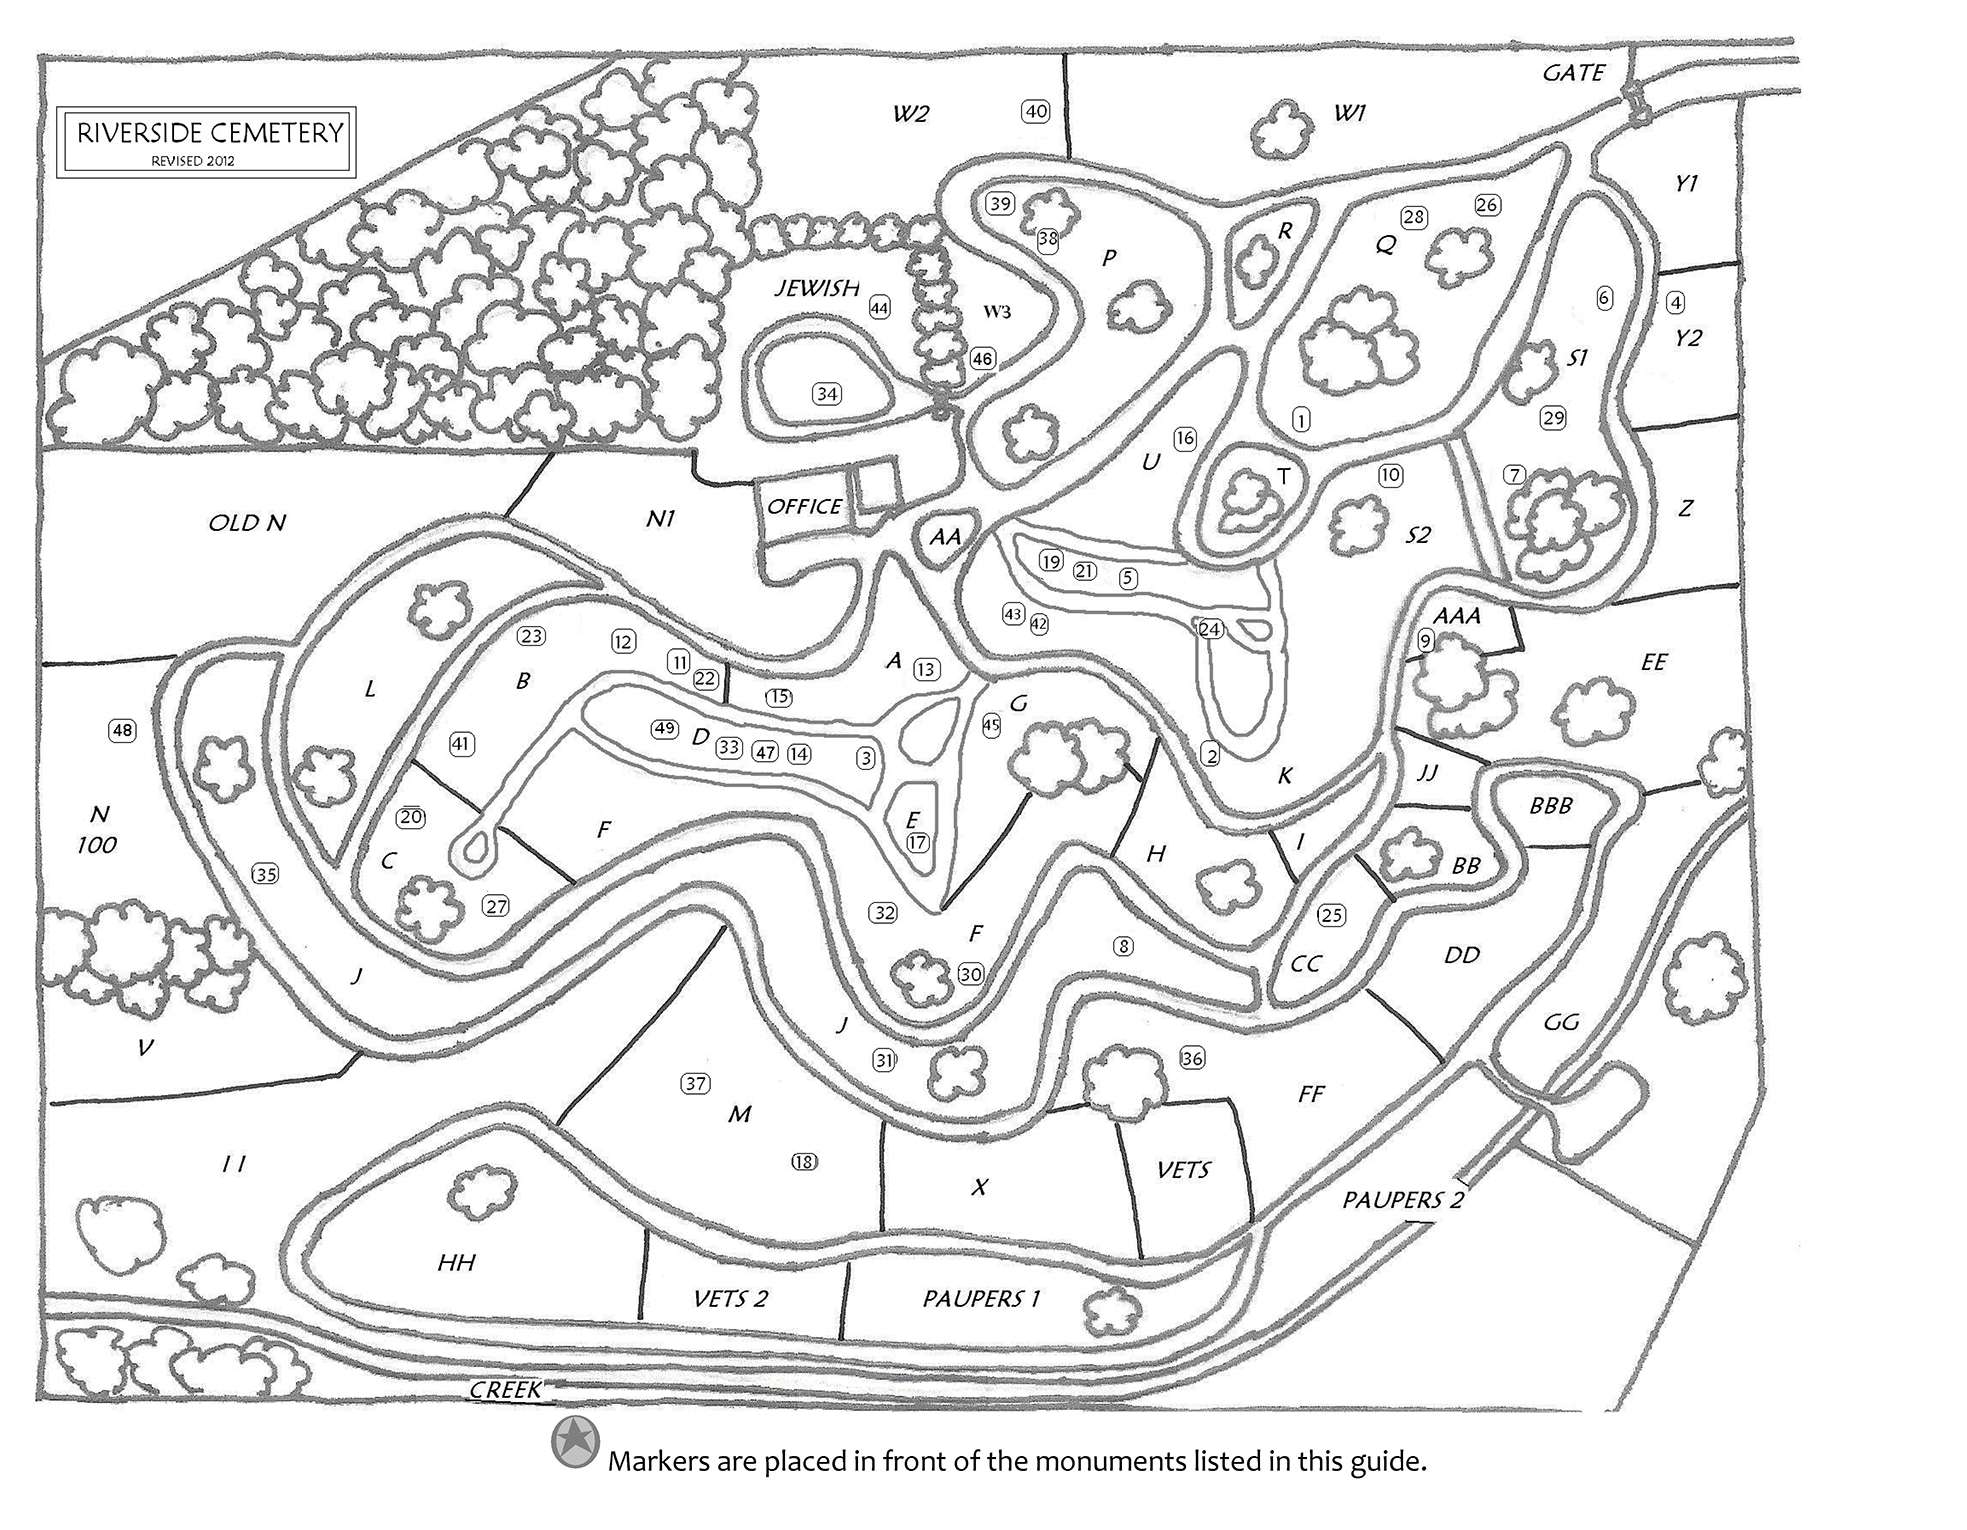 Cemetery map of Riverside Cemetery in Ashville, North Carolina.